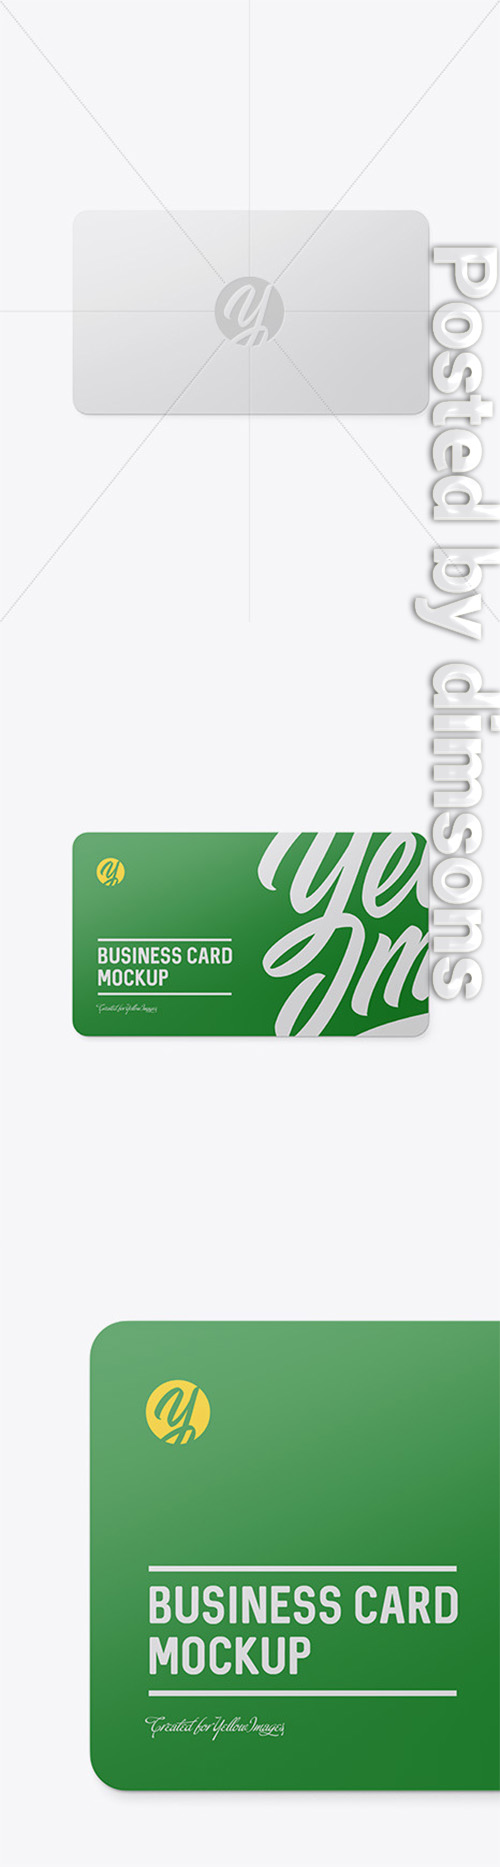 Plastic Business Card 50522 TIF